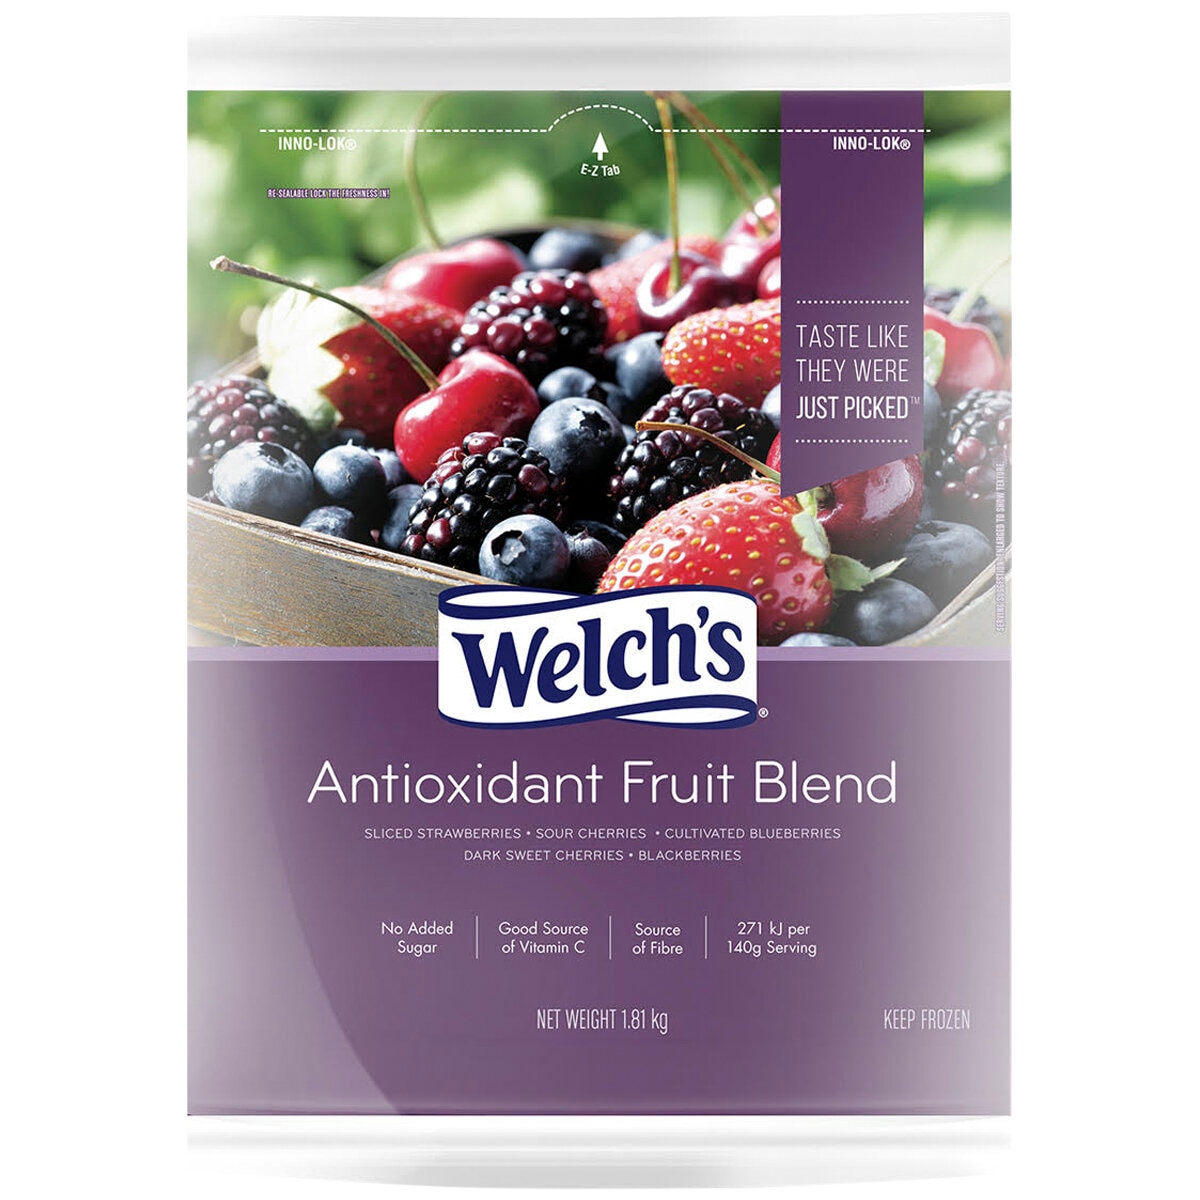 Welch's Antioxidant Fruit Blend 1.81kg